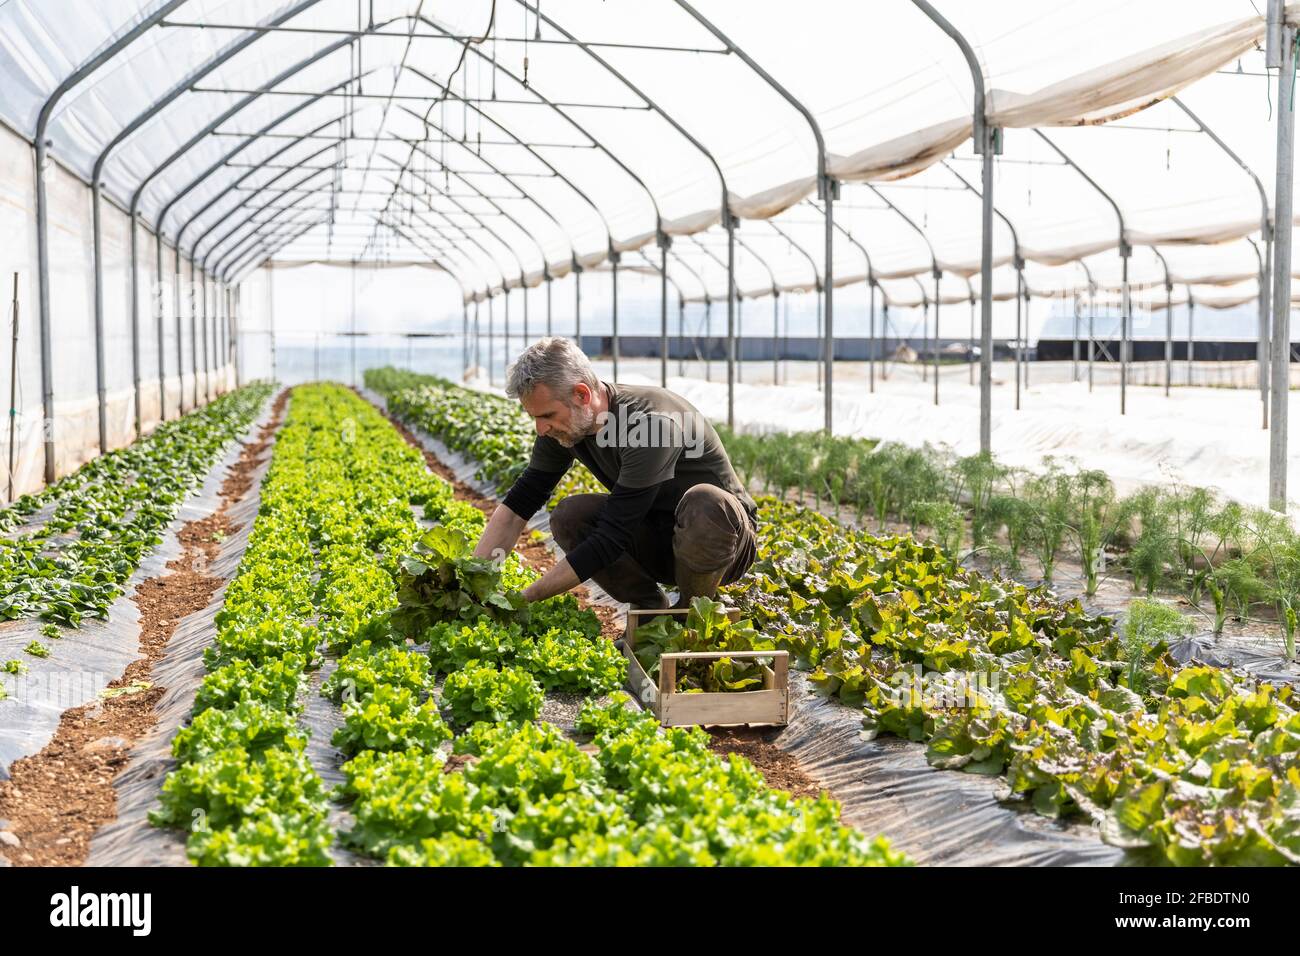 Mature male farmer harvesting lettuce at greenhouse Stock Photo